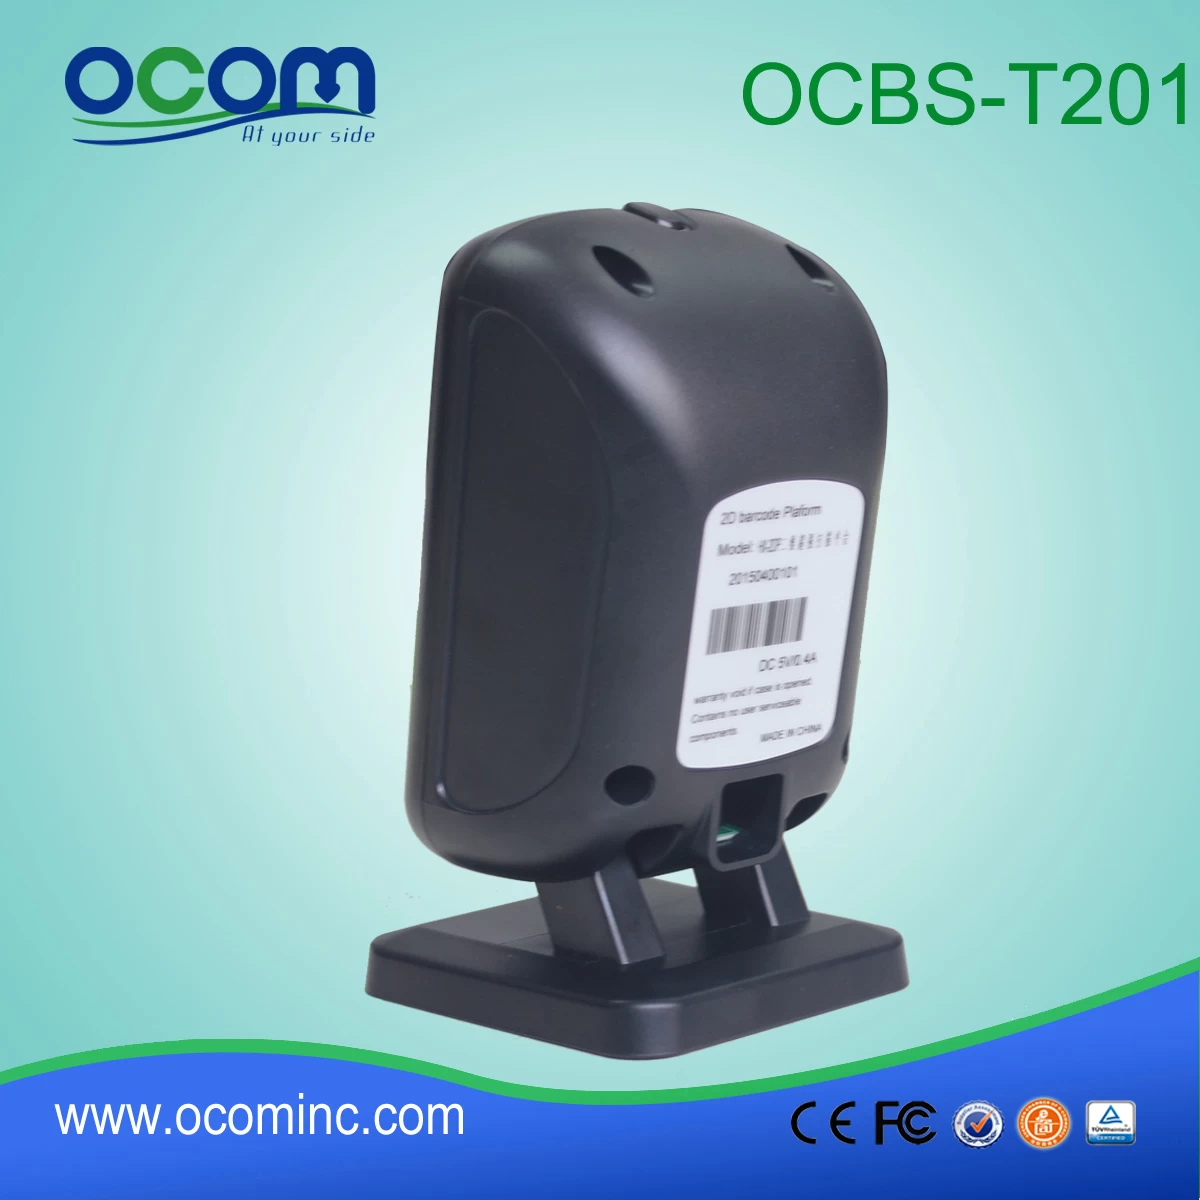 1D & 2D Omni-directional Image Barcode Scanner OCBS-T201